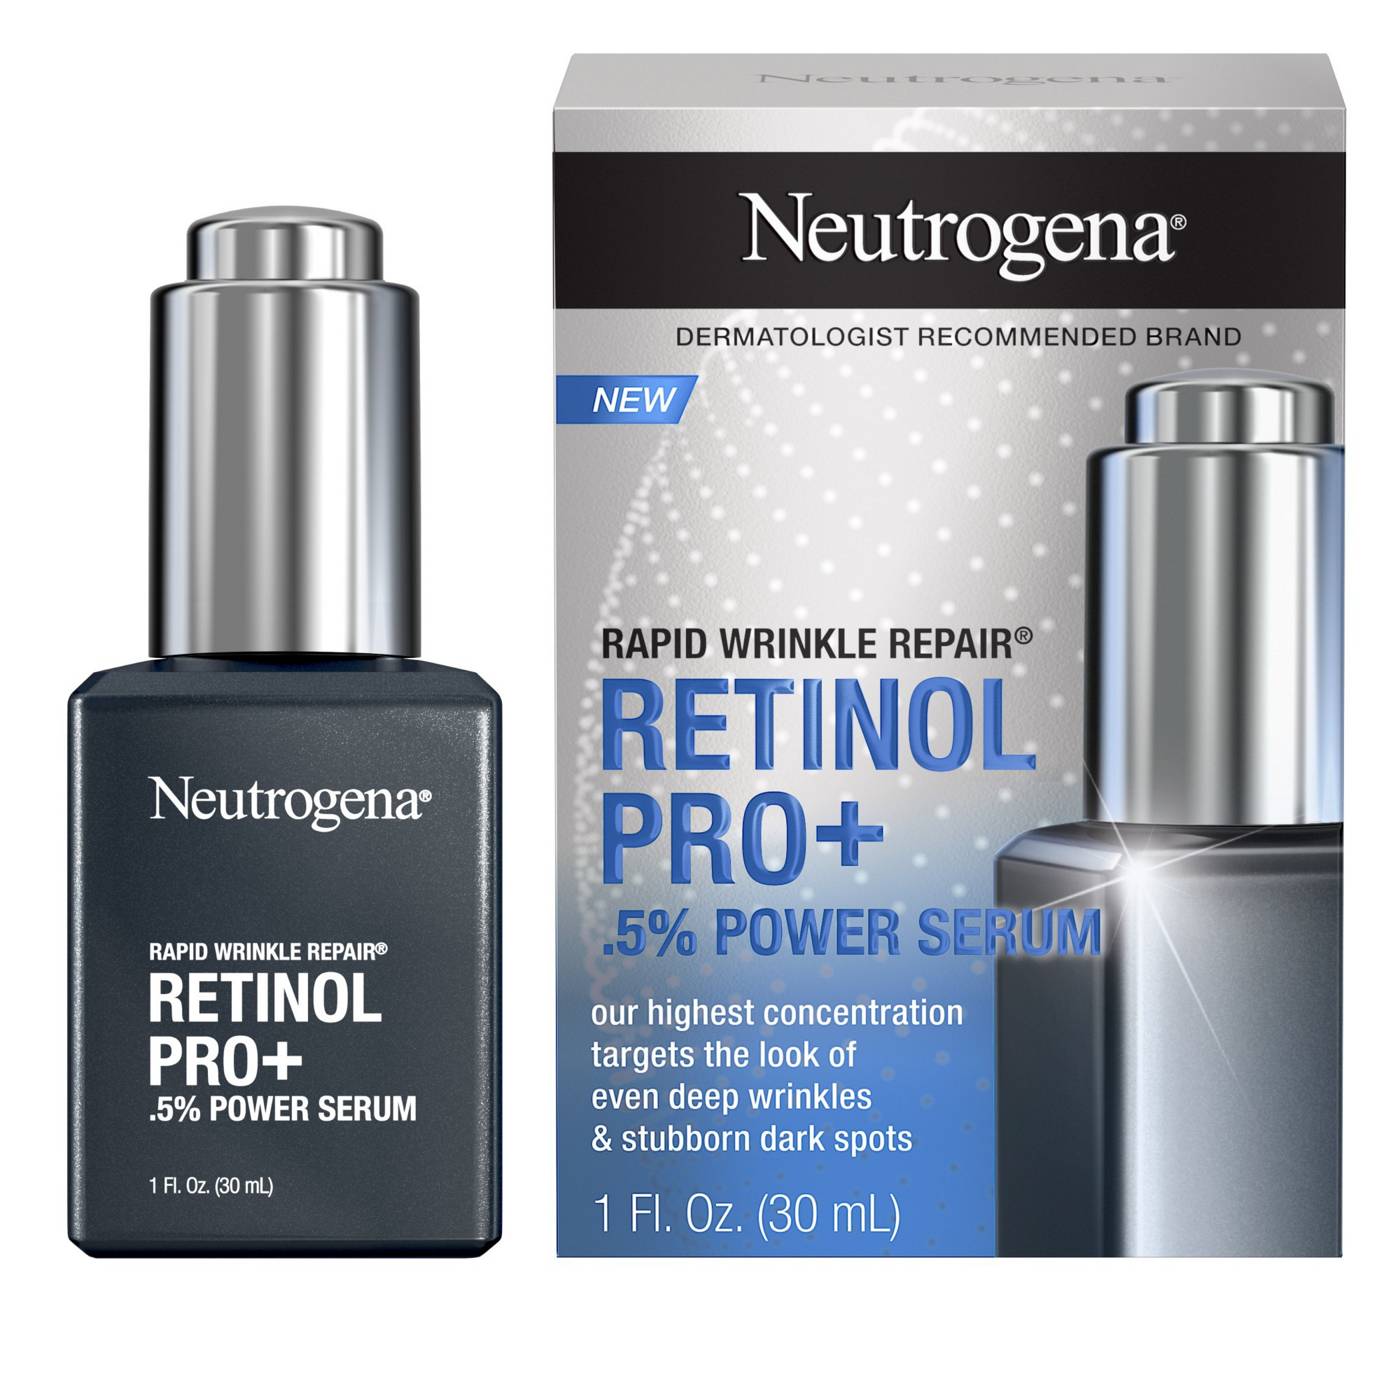 Neutrogena Rapid Wrinkle Repair Retinol Pro+ .5% Power Serum; image 4 of 5